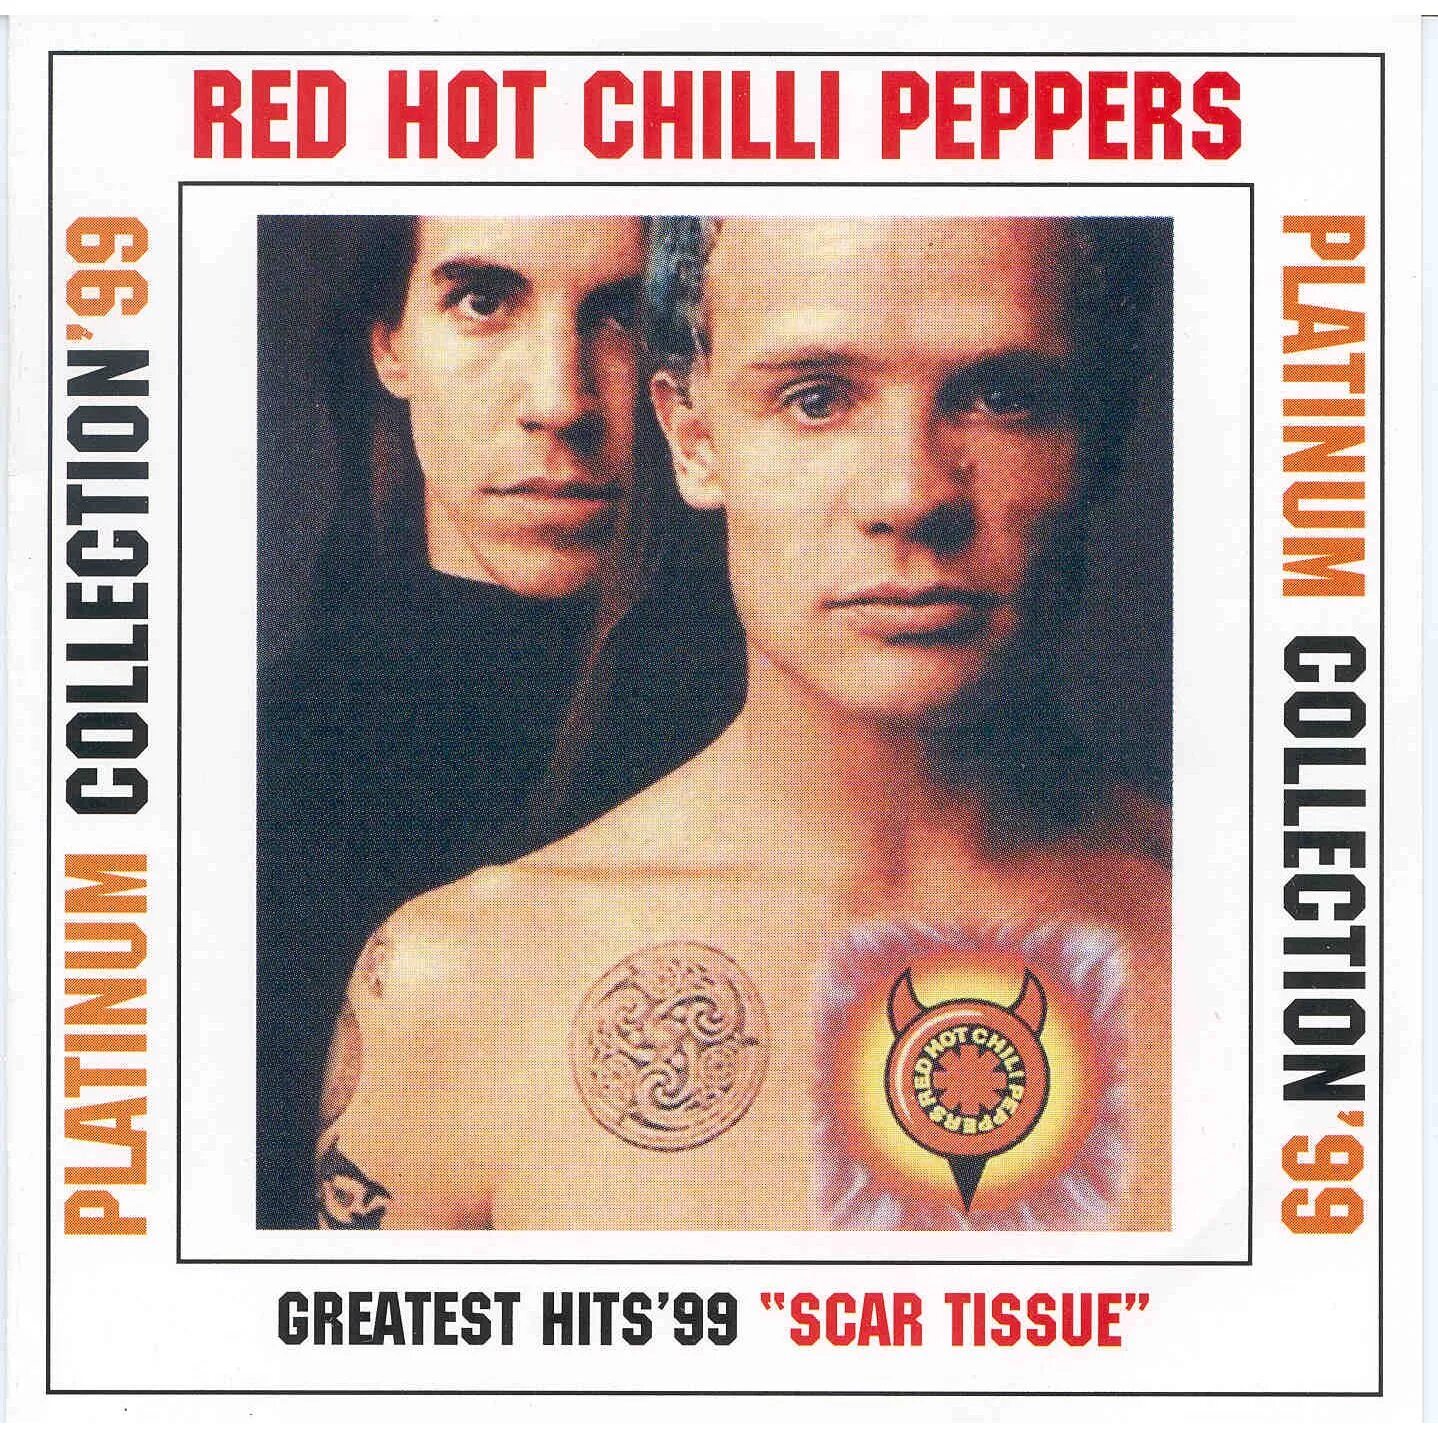 Red hot chili peppers mp3. Ред хот Чили Пепперс. Red hot Chili Peppers обложка. Red hot Chili Peppers альбомы. RHCP обложки альбомов.